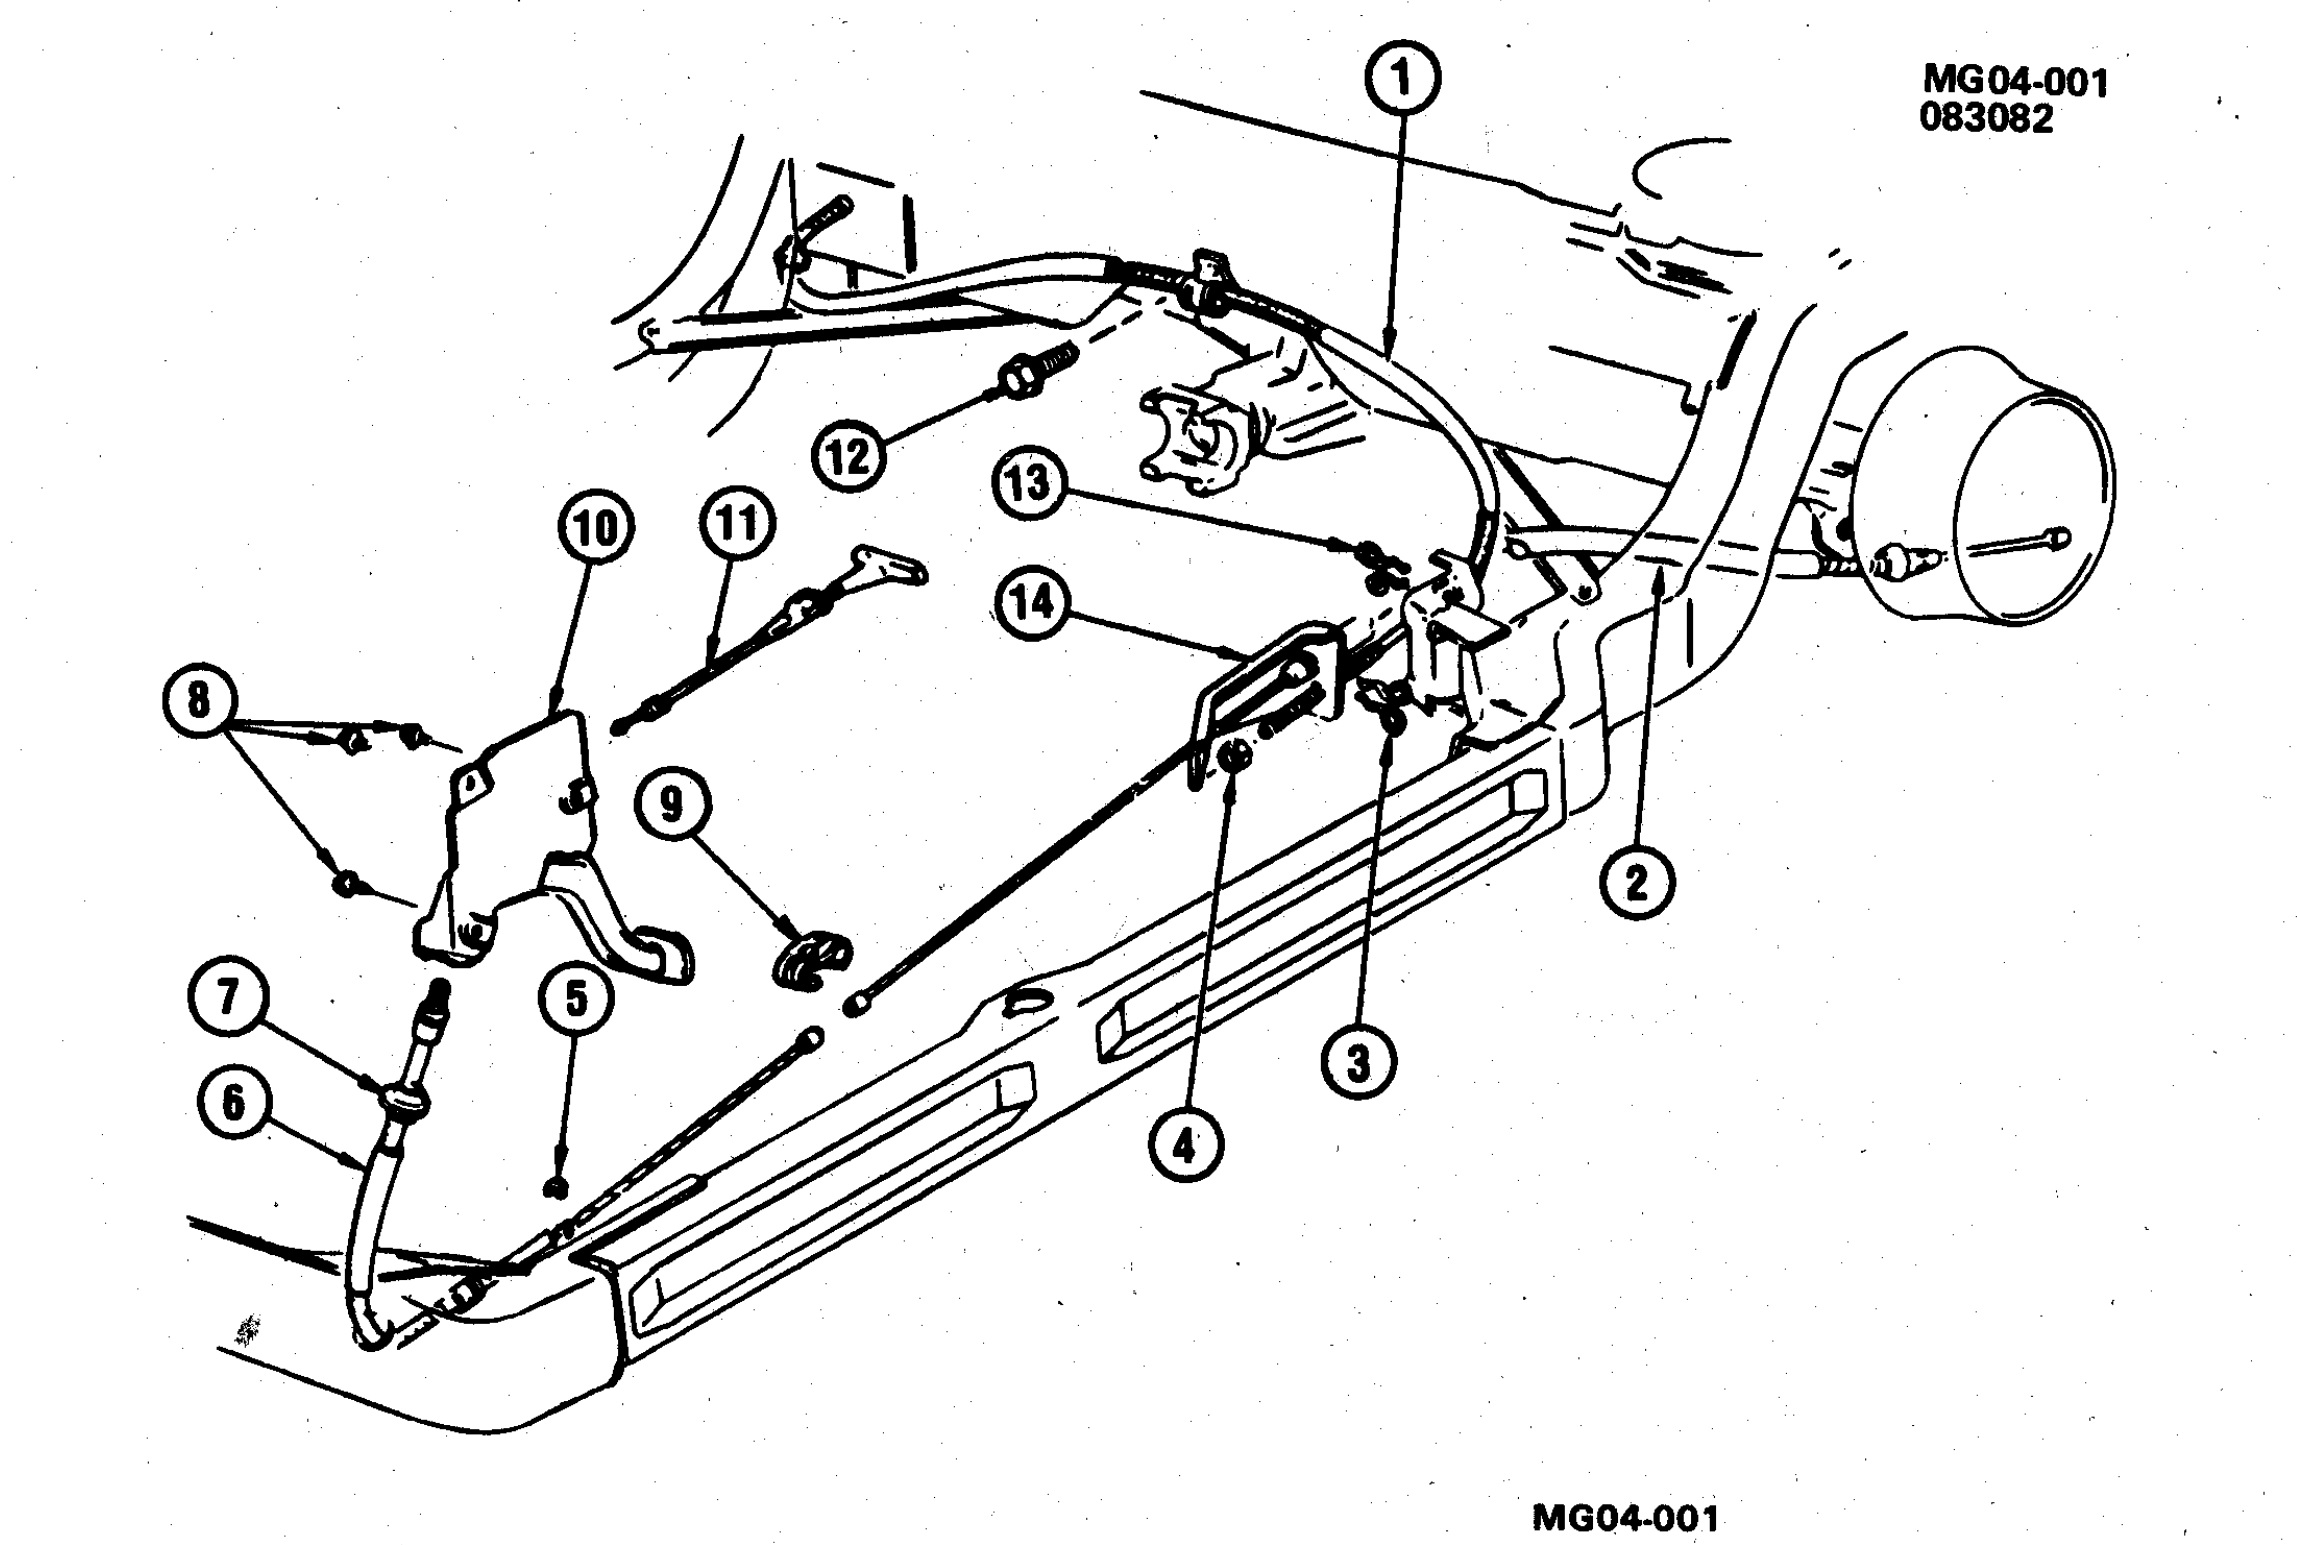 G-body parking break parts illustration 1.jpg